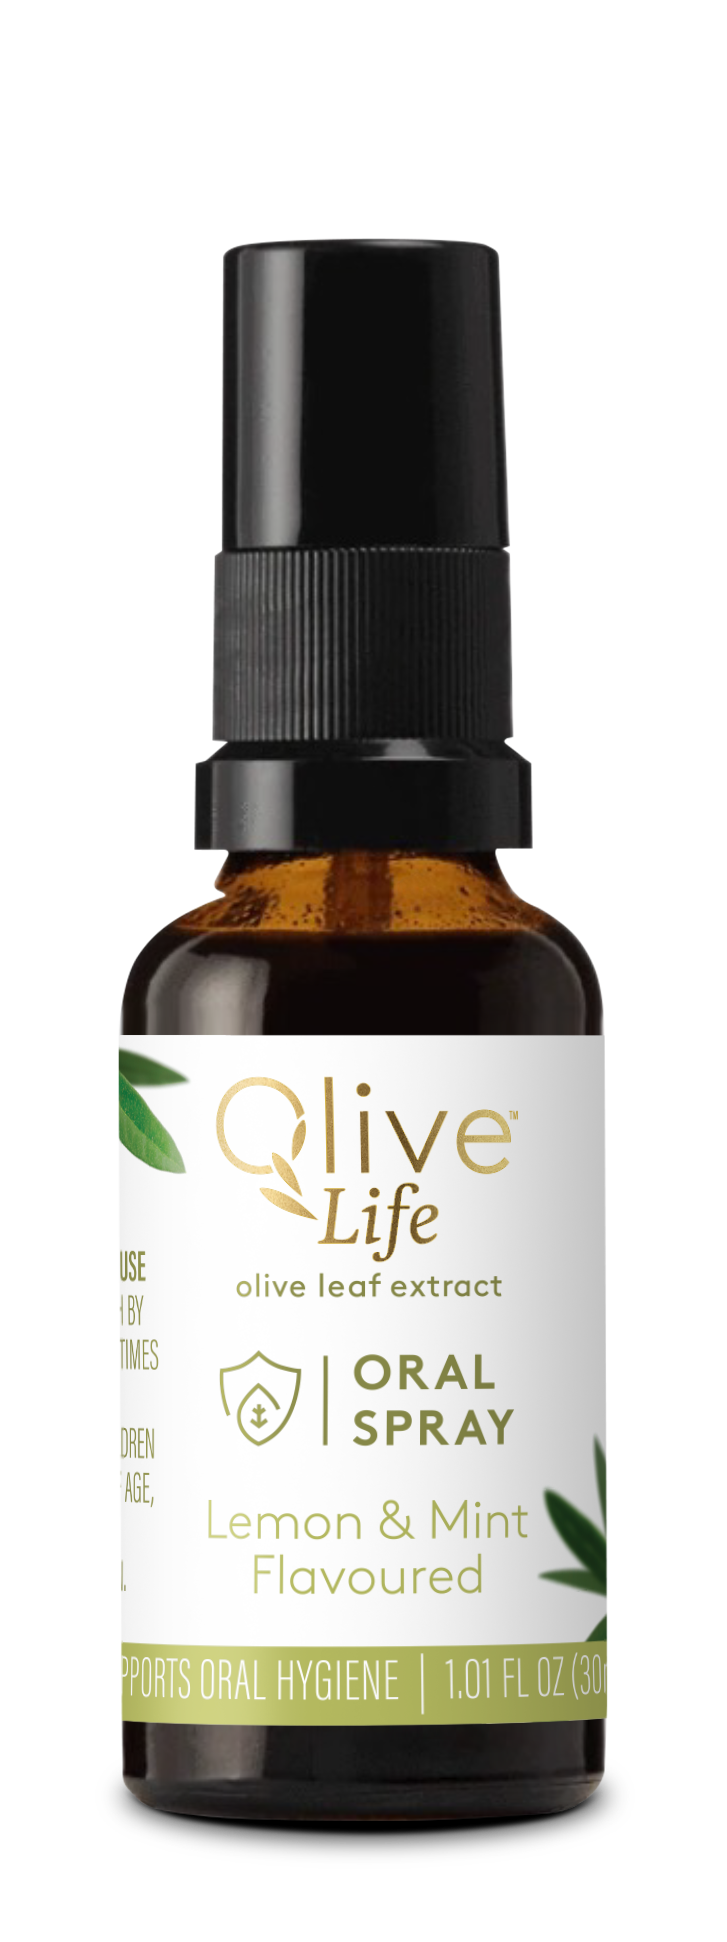 Olive Life Oral Spray 30ml Bottle